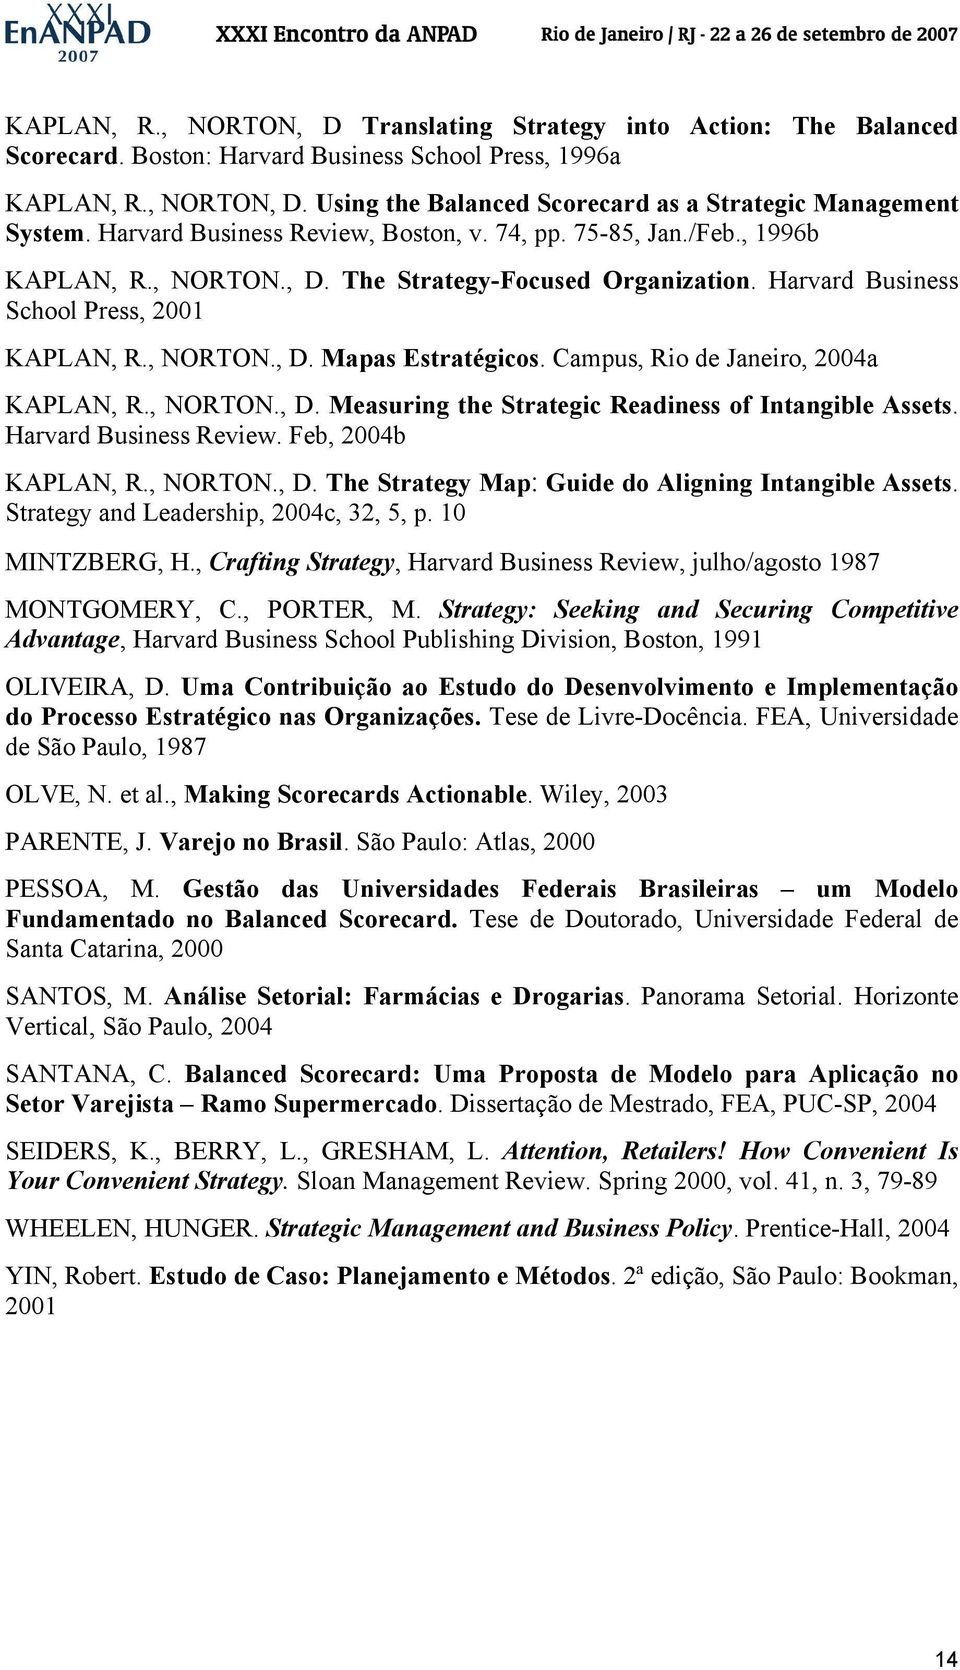 Campus, Rio de Janeiro, 2004a KAPLAN, R., NORTON., D. Measuring the Strategic Readiness of Intangible Assets. Harvard Business Review. Feb, 2004b KAPLAN, R., NORTON., D. The Strategy Map Guide do Aligning Intangible Assets.